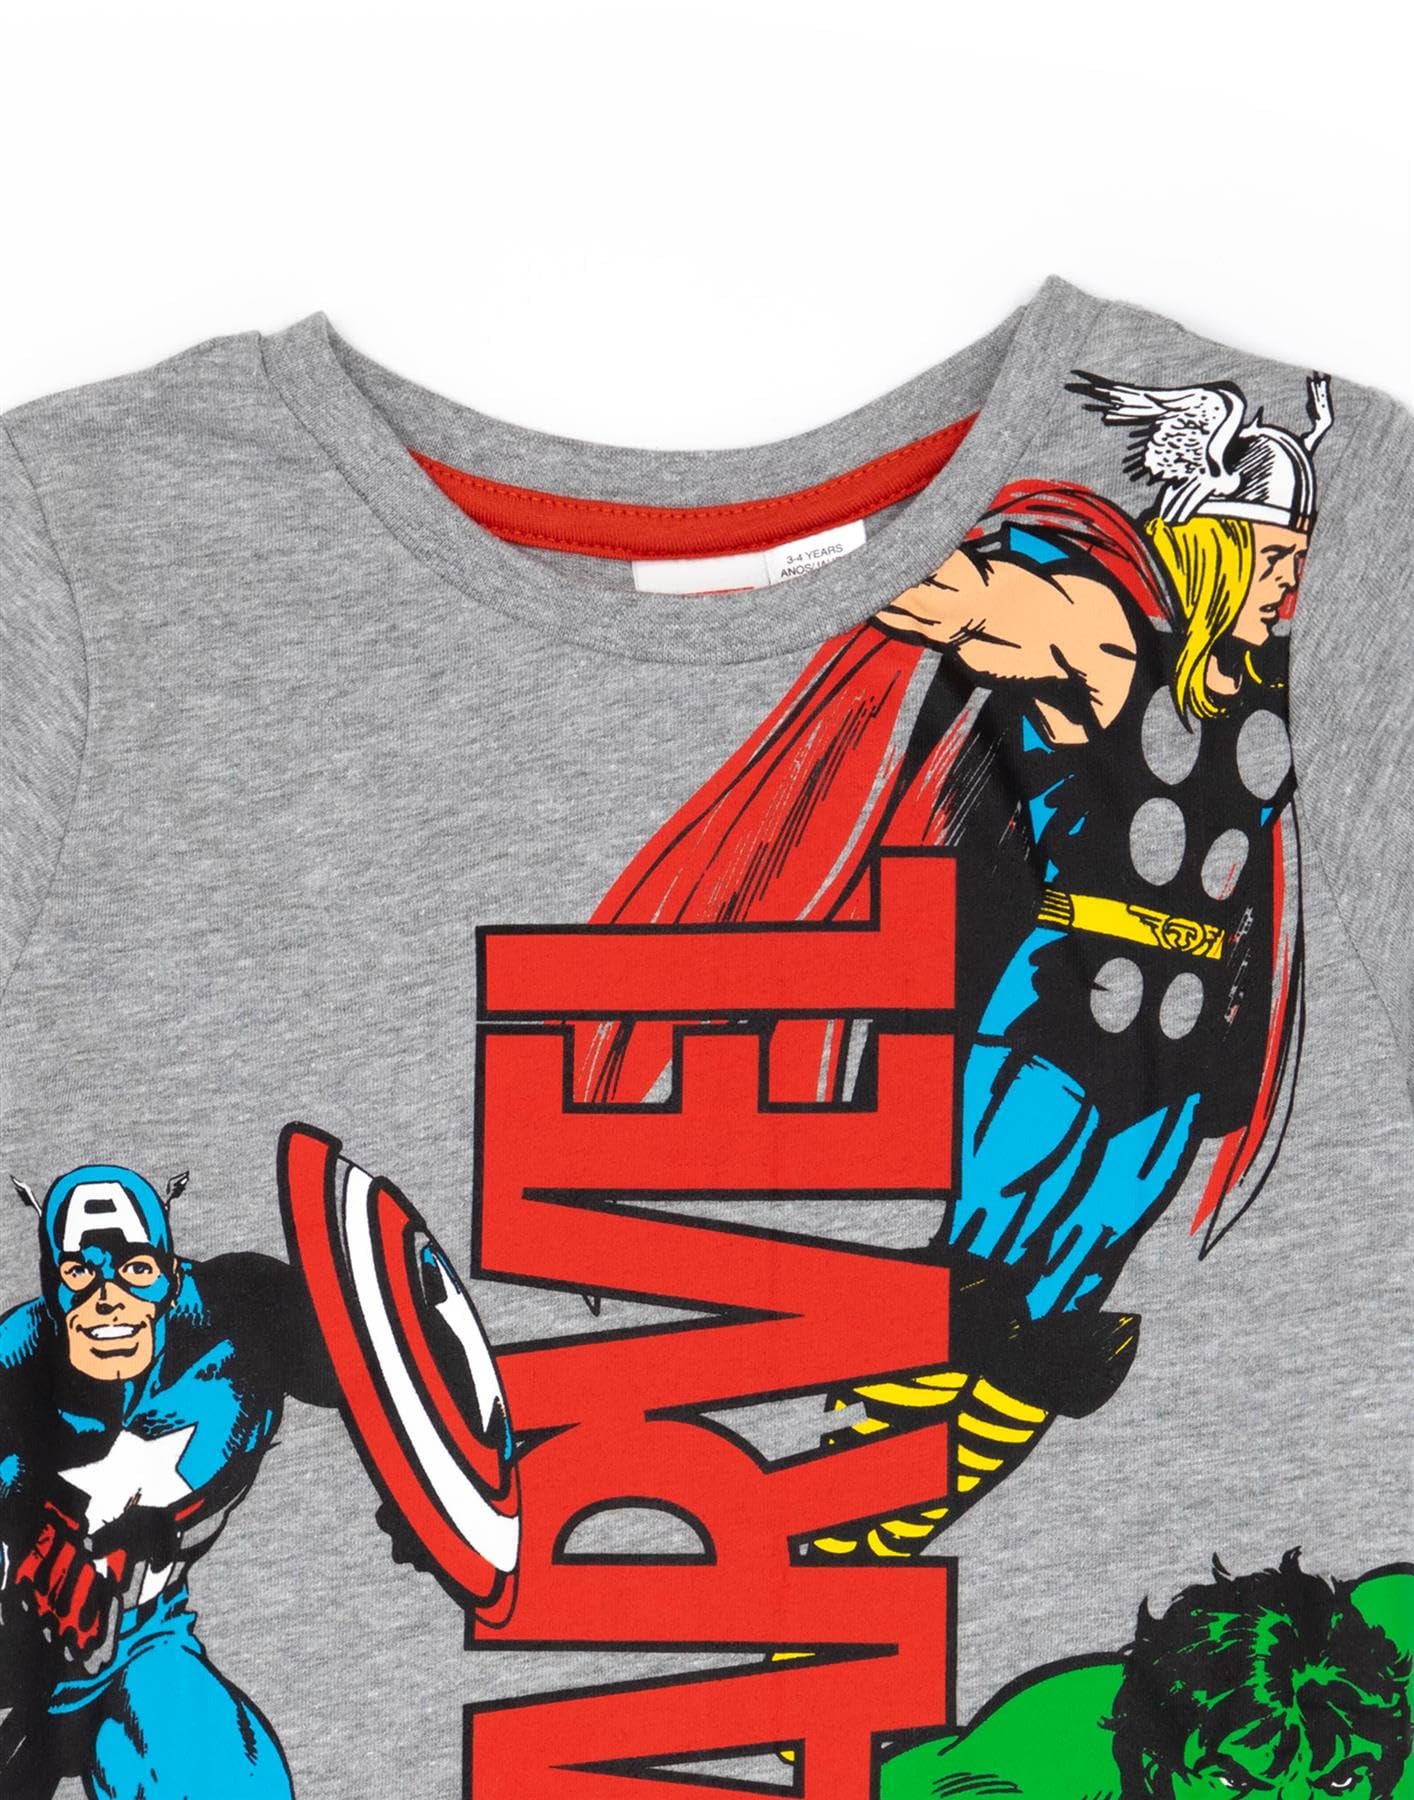 Marvel Boys Pyjama Set | Kids Superhero Grey & Black T-Shirt & Shorts PJs Loungewear | Avengers Pajama Nightwear Gift Set